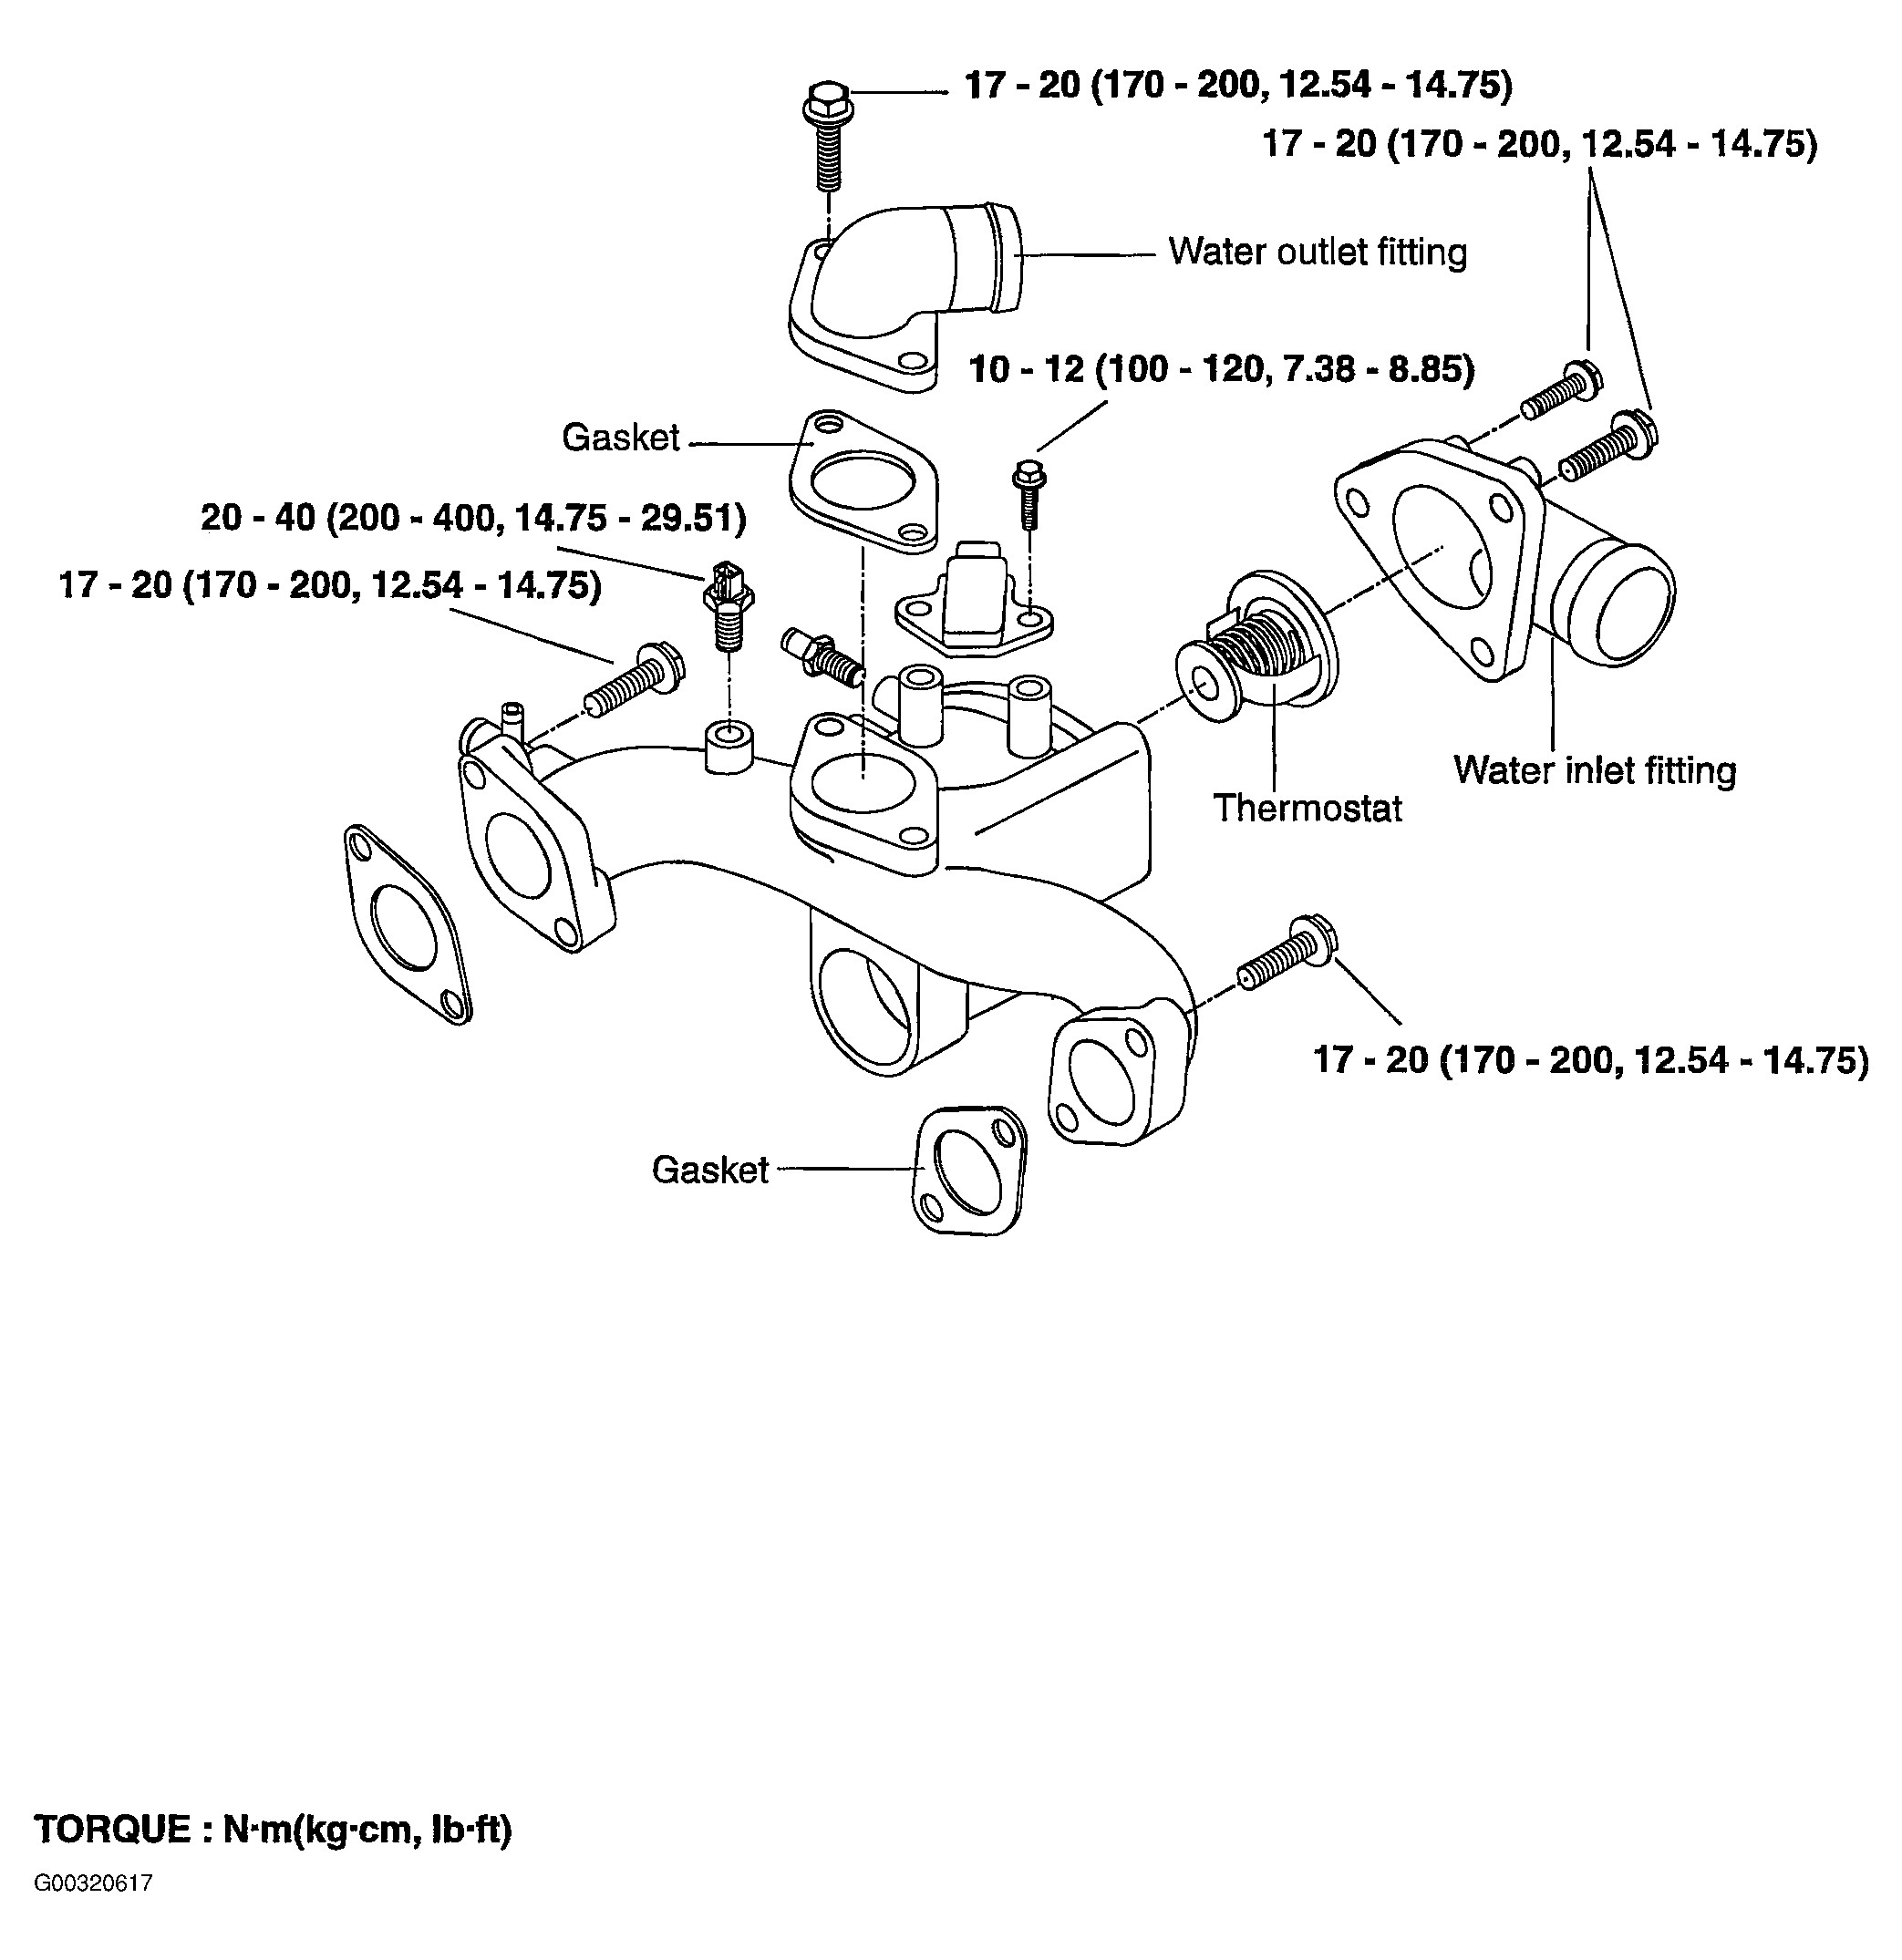 2004 Kia Sedona Engine Diagram Car towmotor 4 Cylinder Engine Diagram Kia Sedona Engine Of 2004 Kia Sedona Engine Diagram